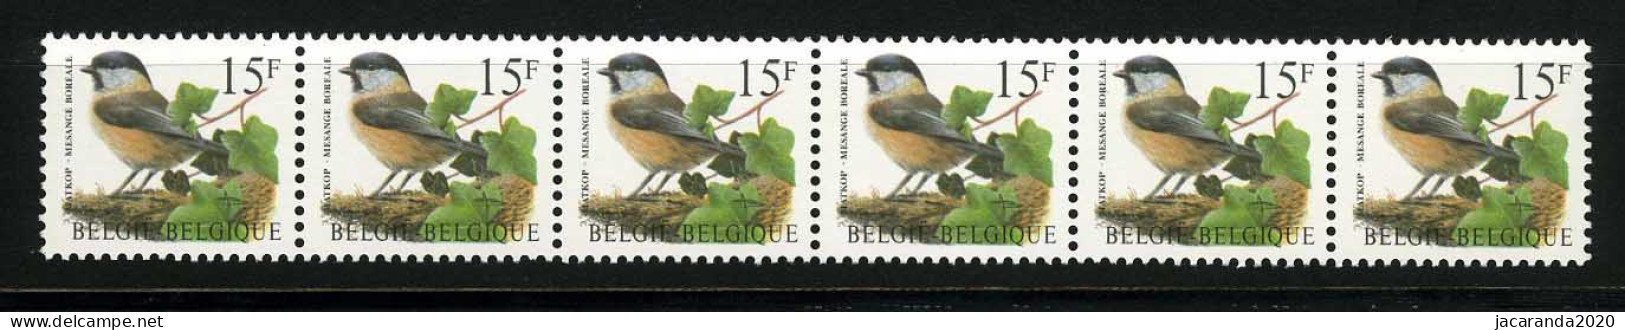 België R81a - Vogels - Oiseaux - Buzin (2732) - Strook Van 6 ZONDER NUMMER - SANS NUMERO - ZELDZAAM - RARE - LUXE - Rollen